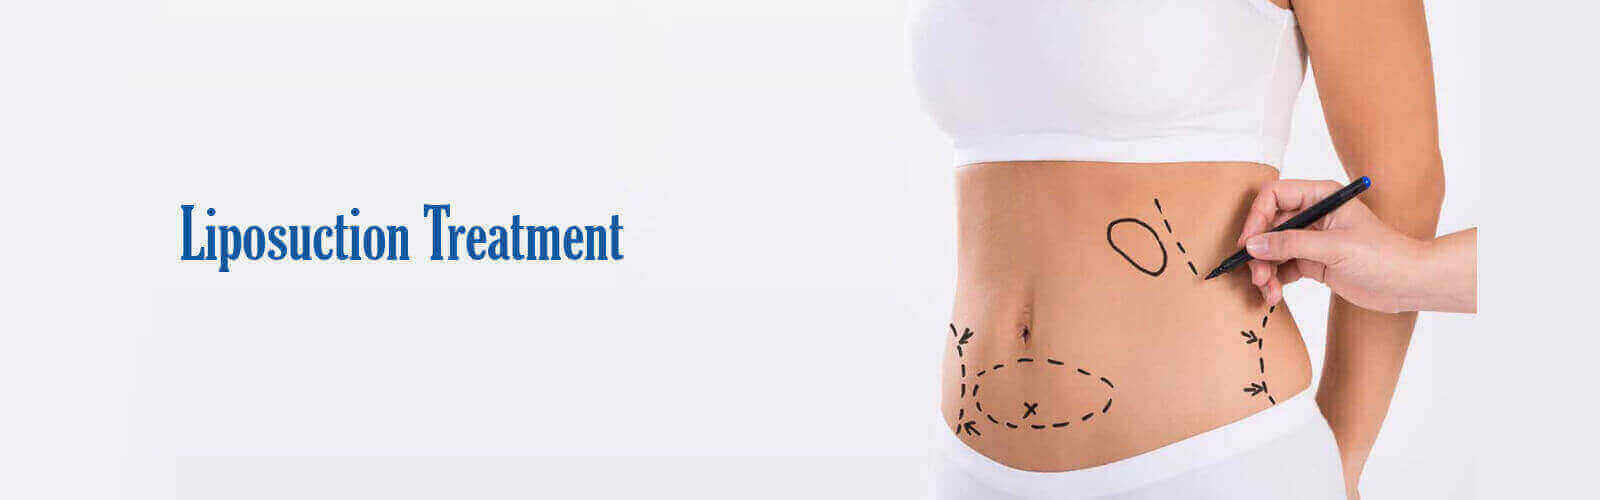 Liposuction Treatment in Israel